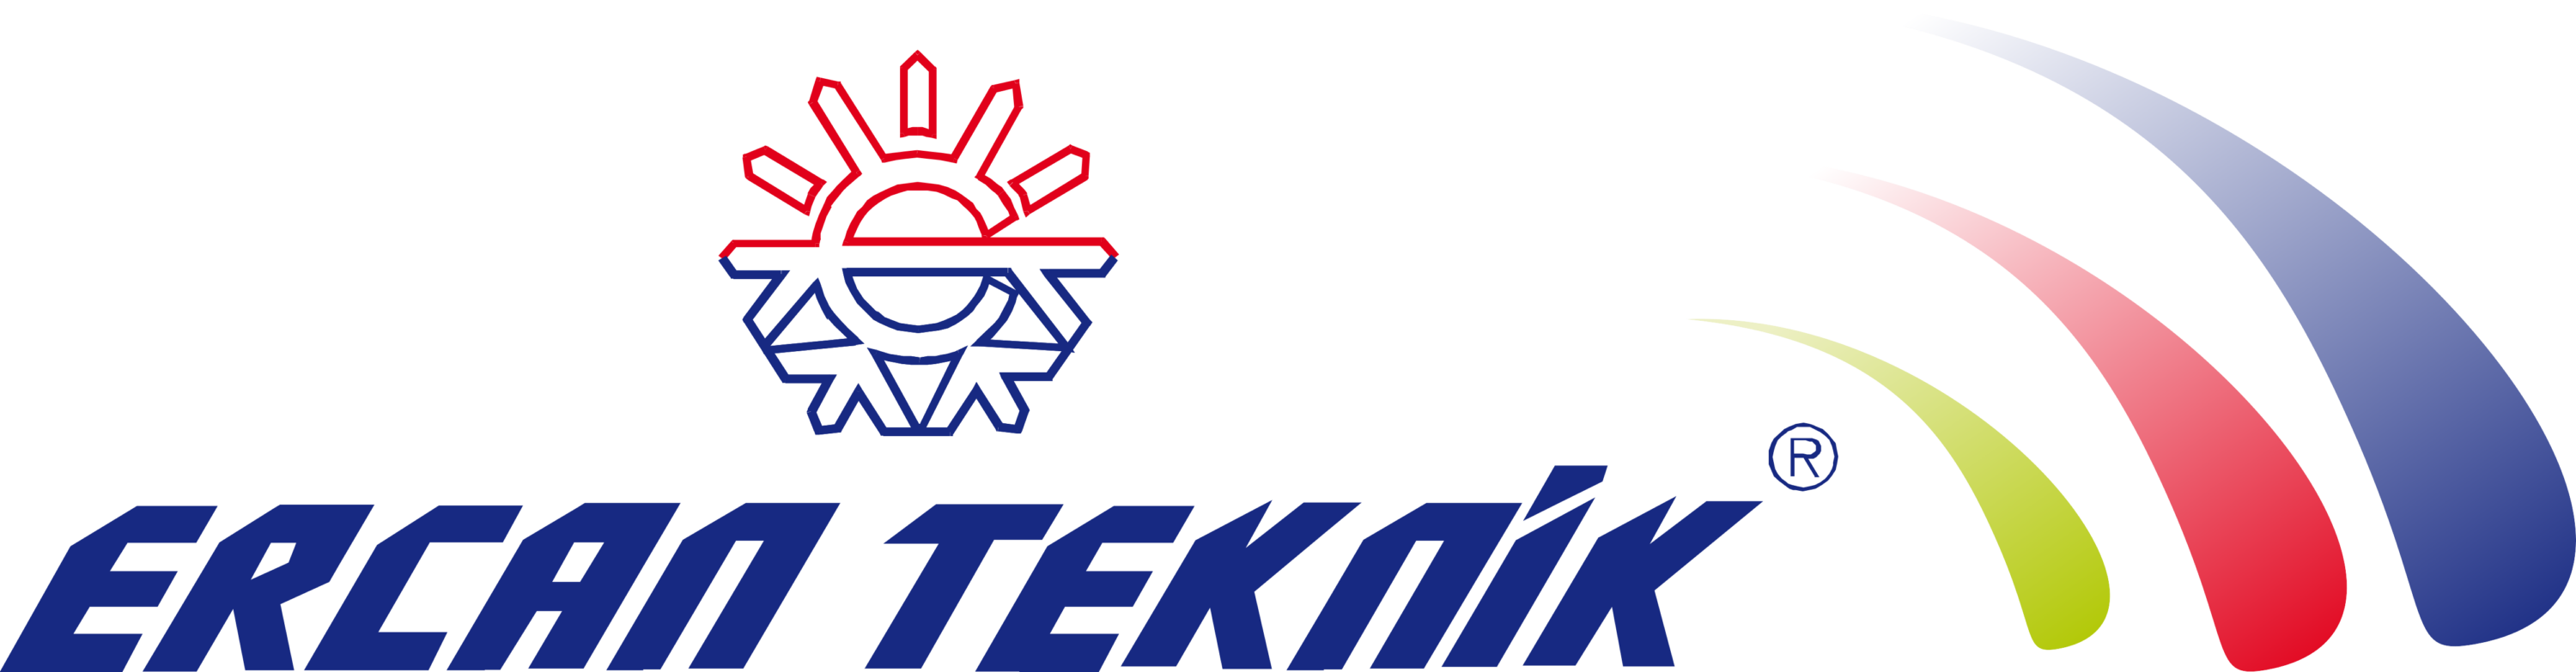 Ercan Teknik Logo